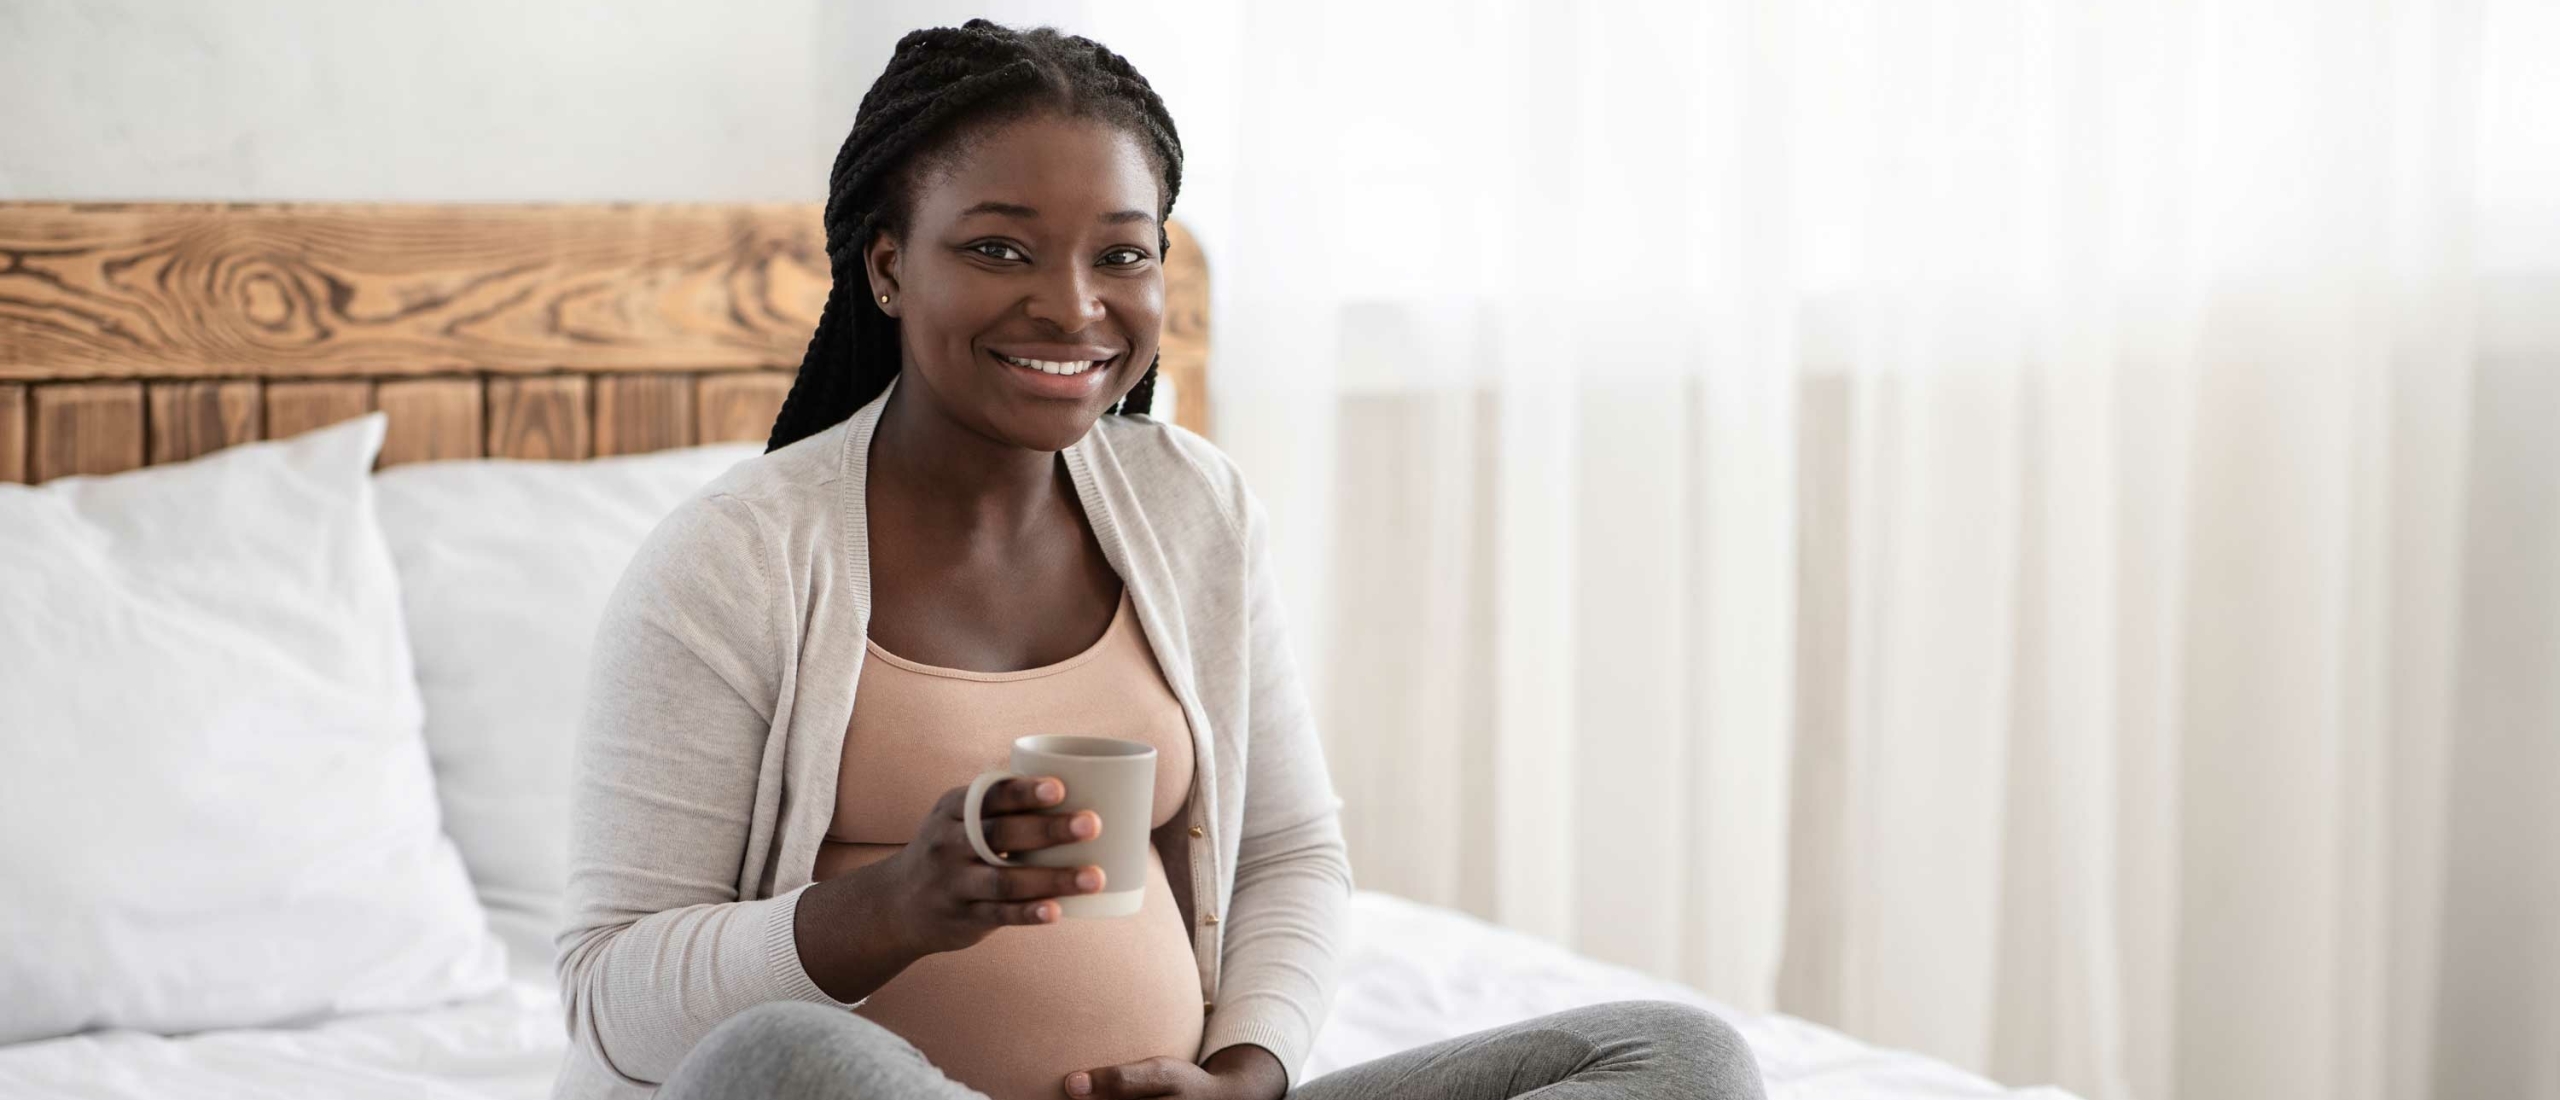 Cafeïne als je zwanger bent? Drink cafeïnevrije koffie!